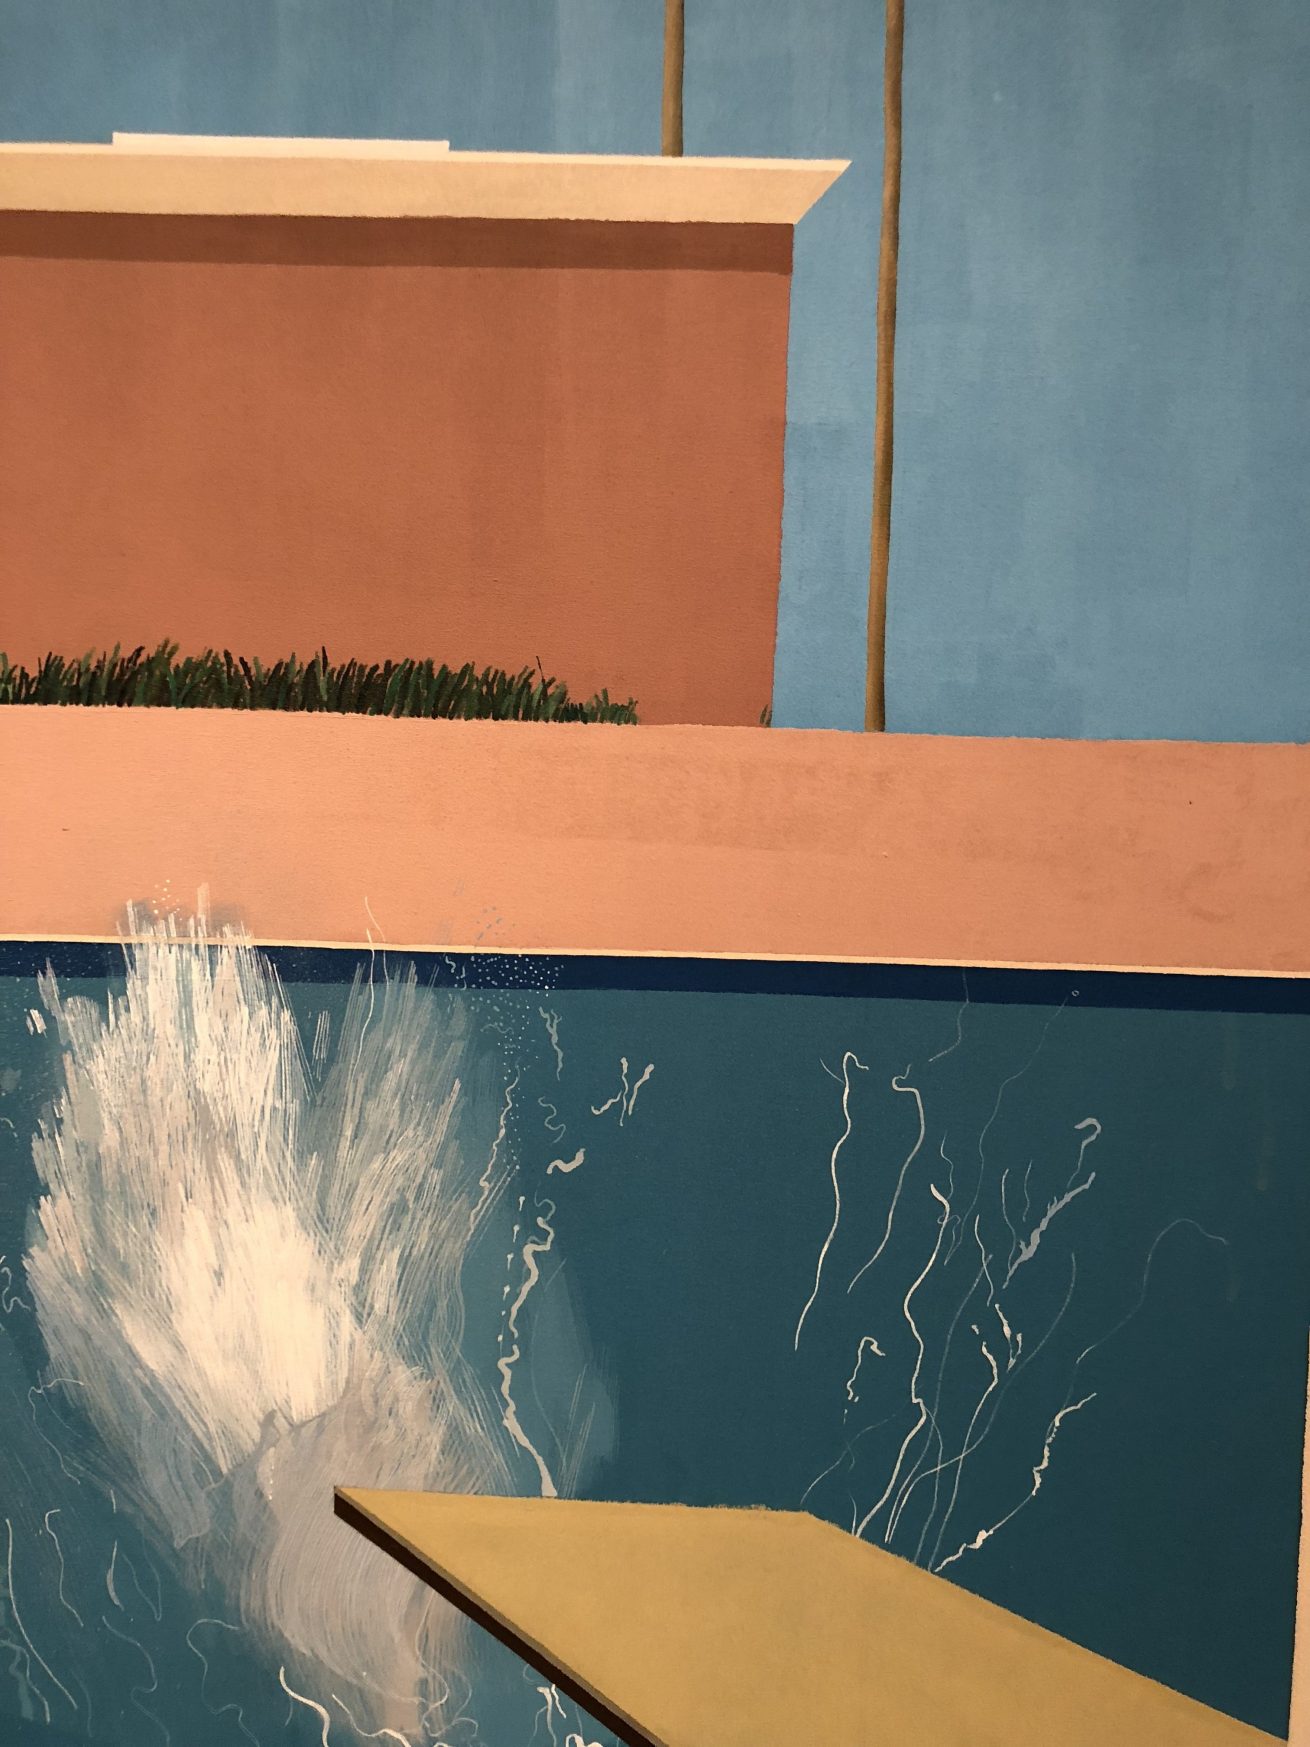 Detail of the work Bigger Splash, Painting after Performance, by David Hockney. Photo: Jorge Grimberg